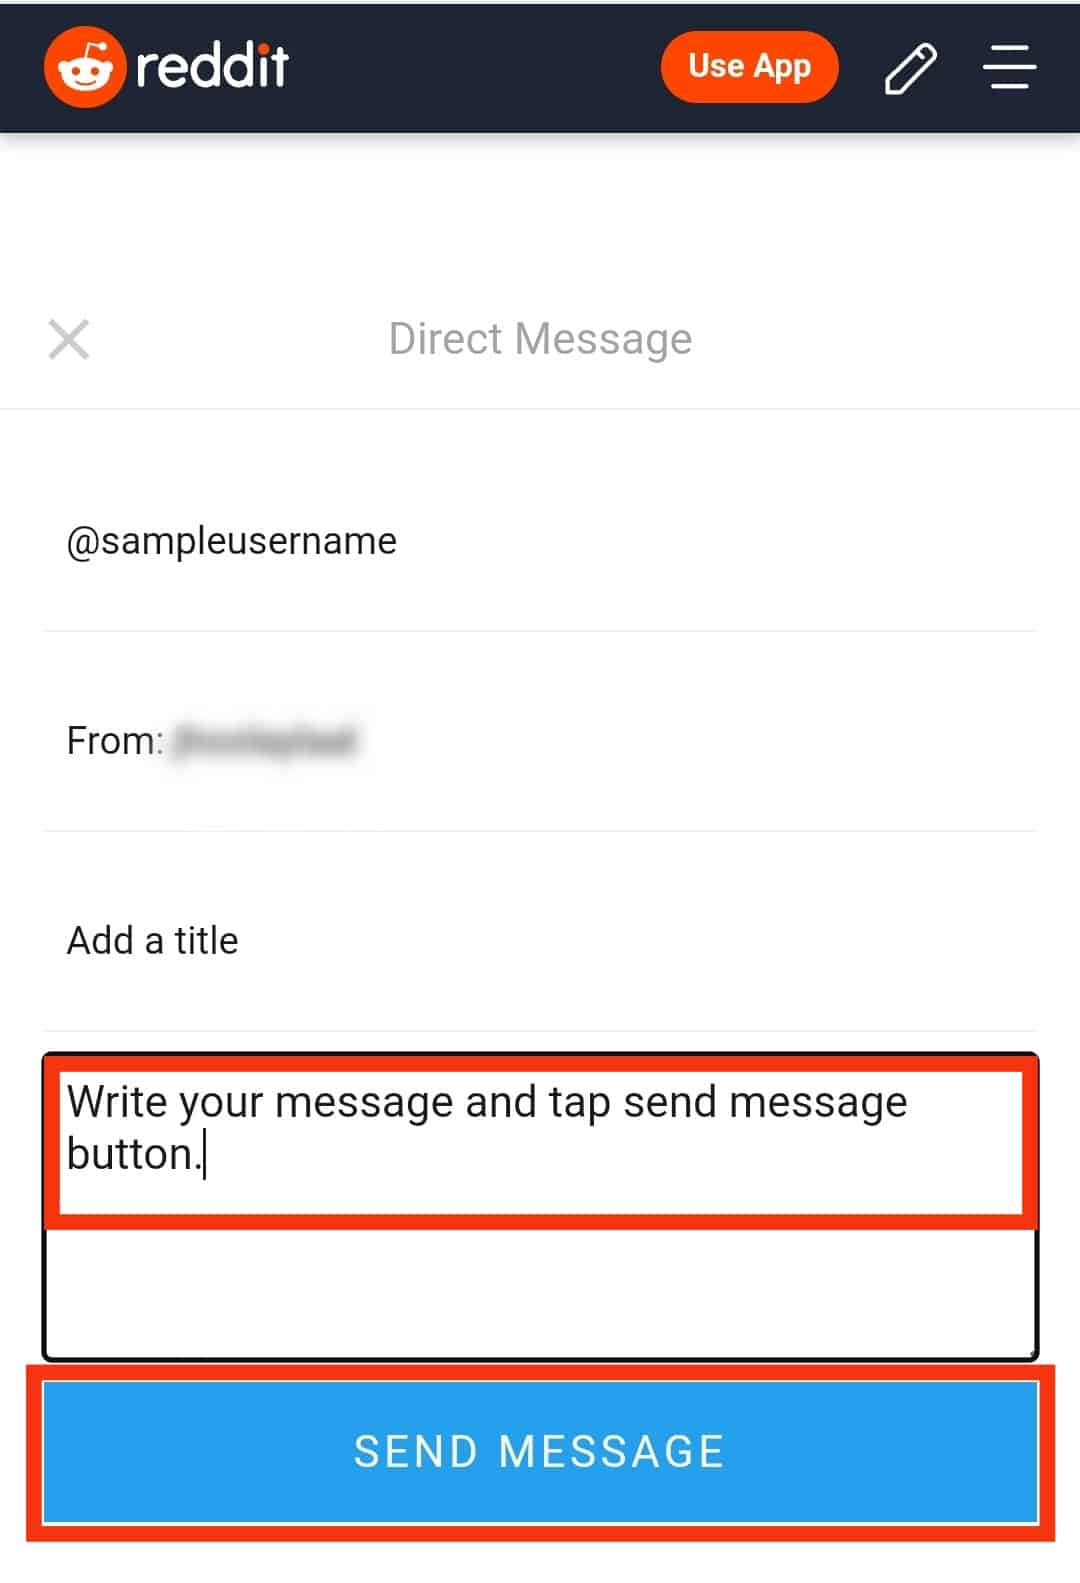 Click Send Message